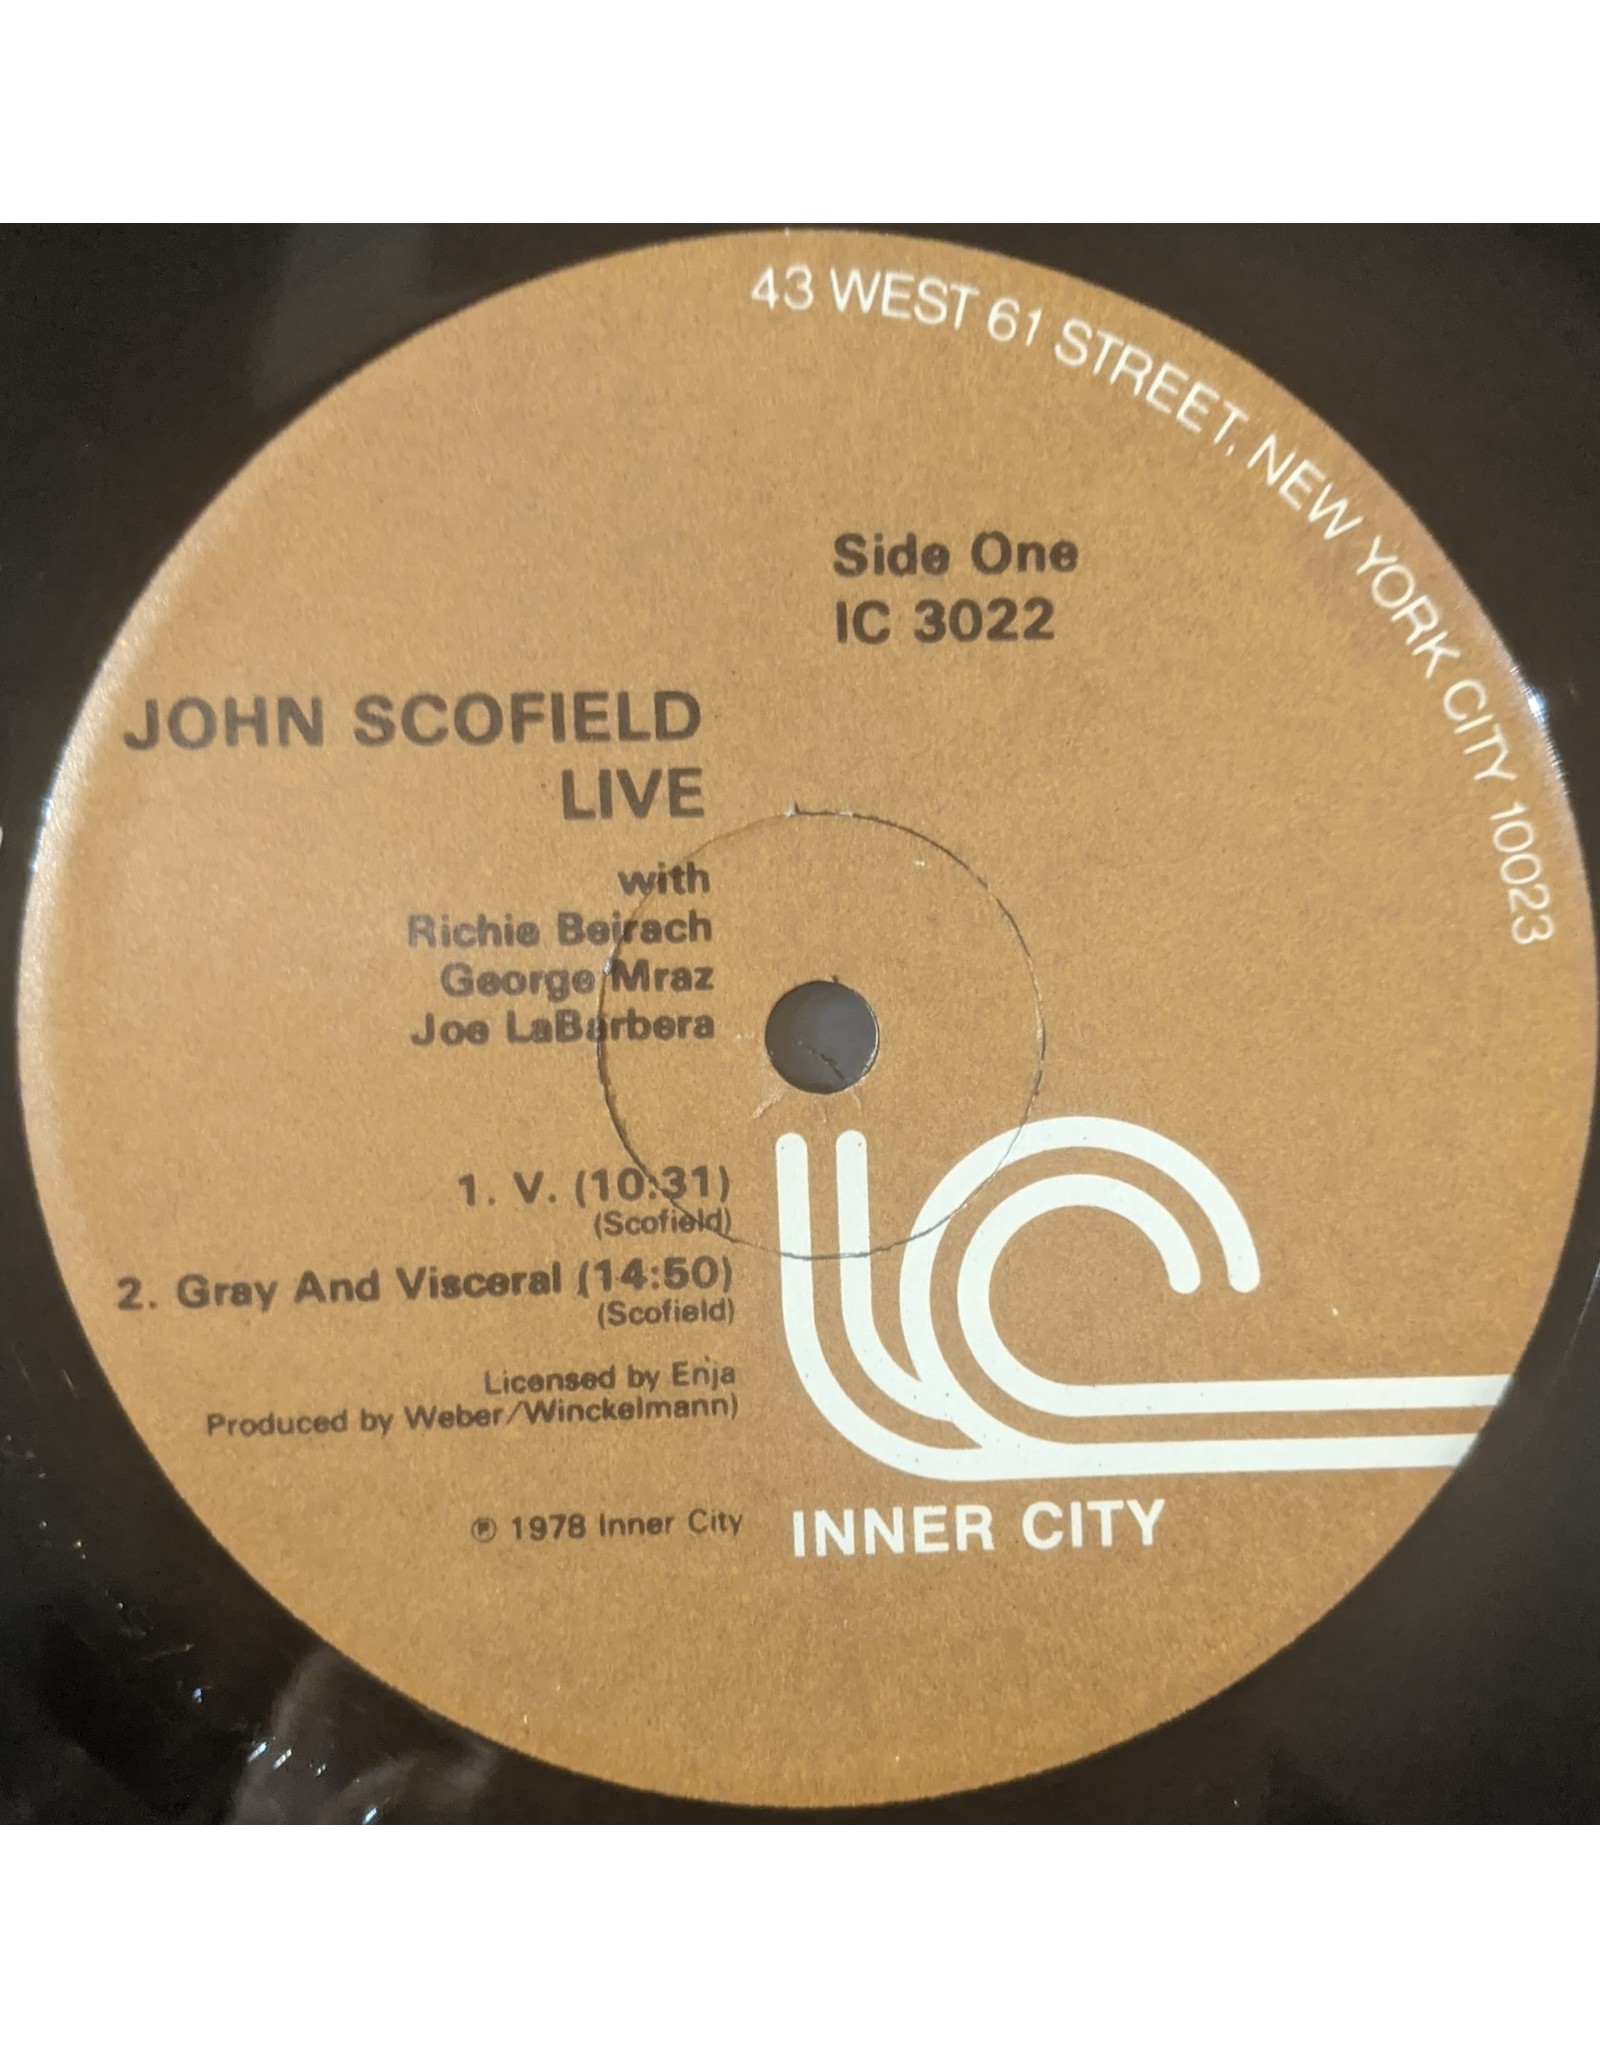 USED: John Scofield: Live LP